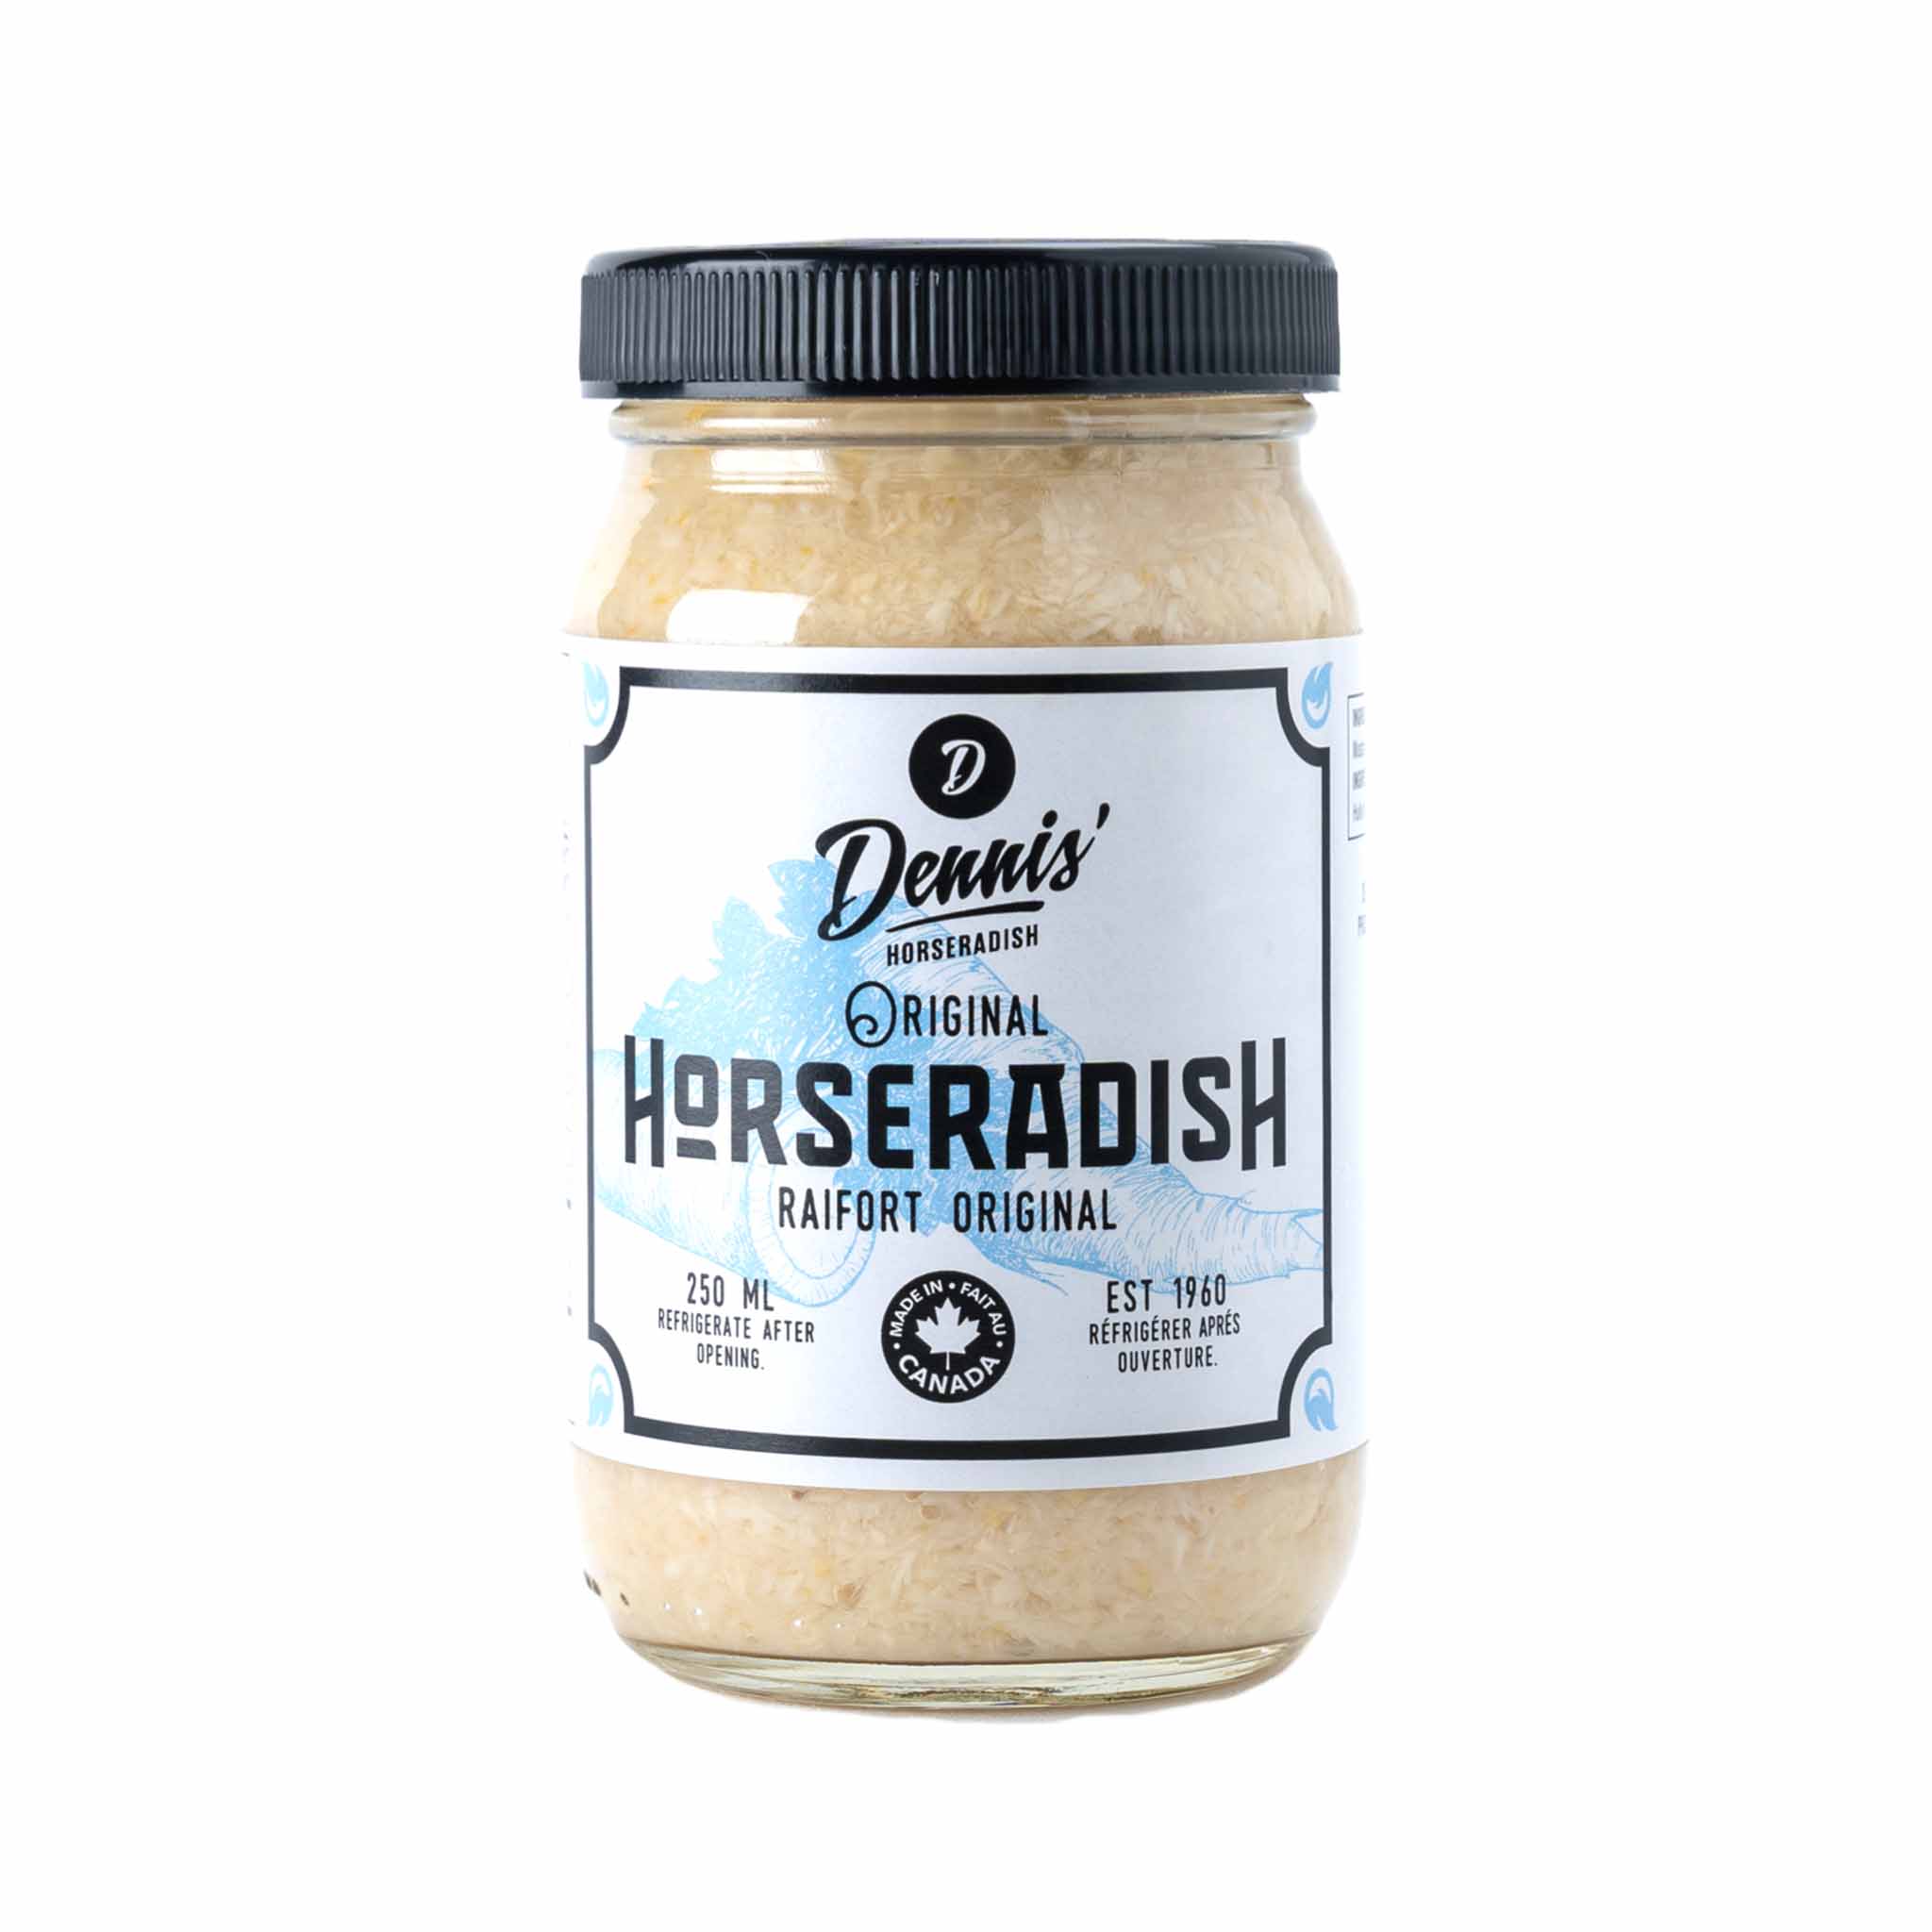 Dennis Original Horseradish in a Jar